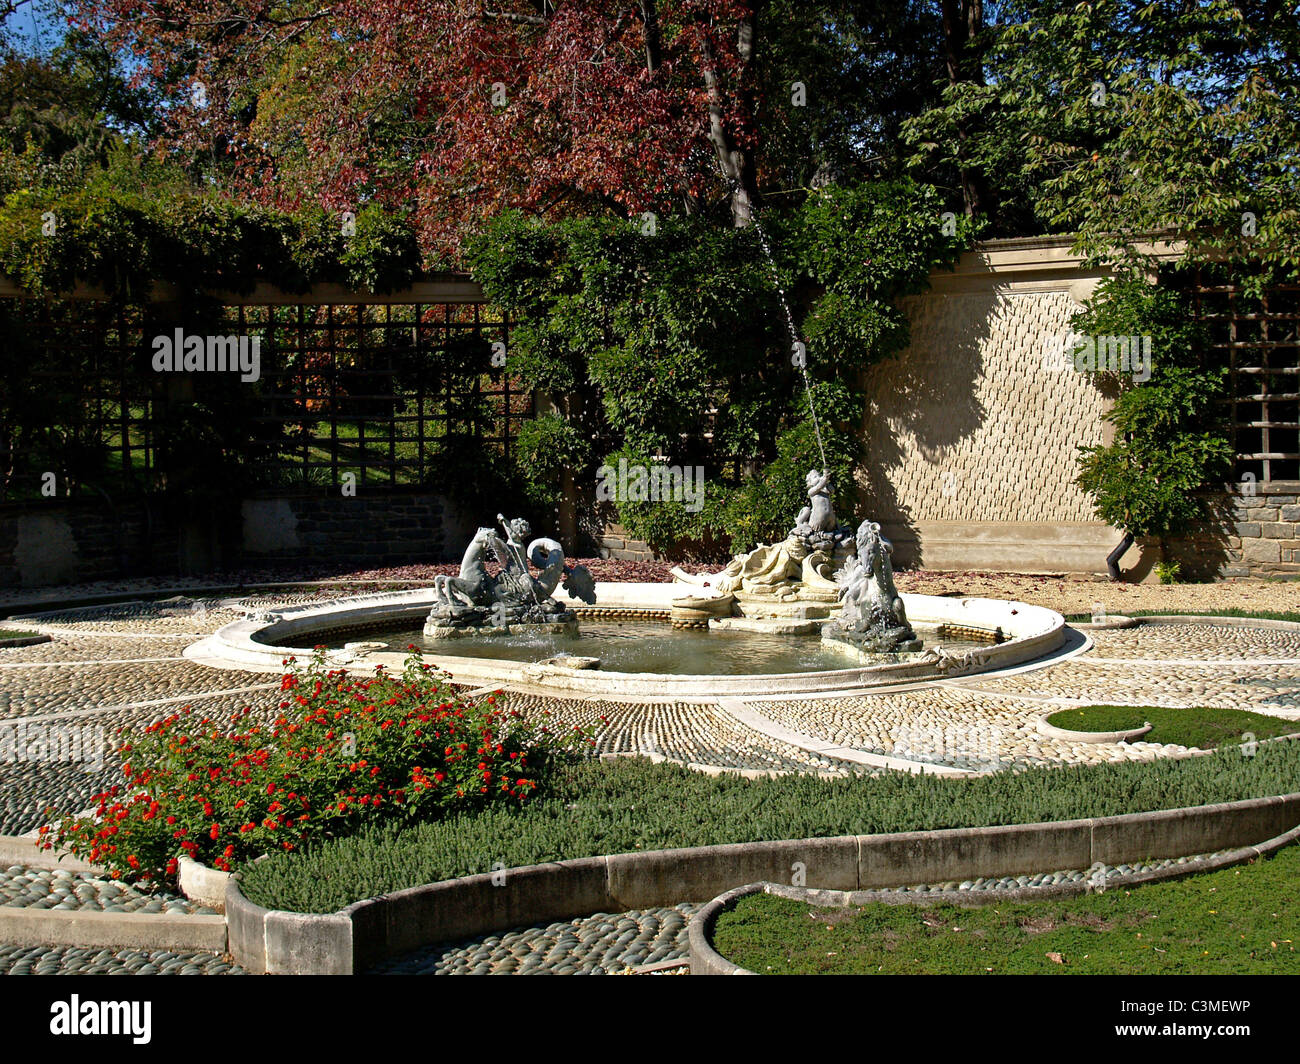 der Brunnen im Garten Kiesel in Dumbarton Oaks, Washington, DC - Oktober 2008 Stockfoto